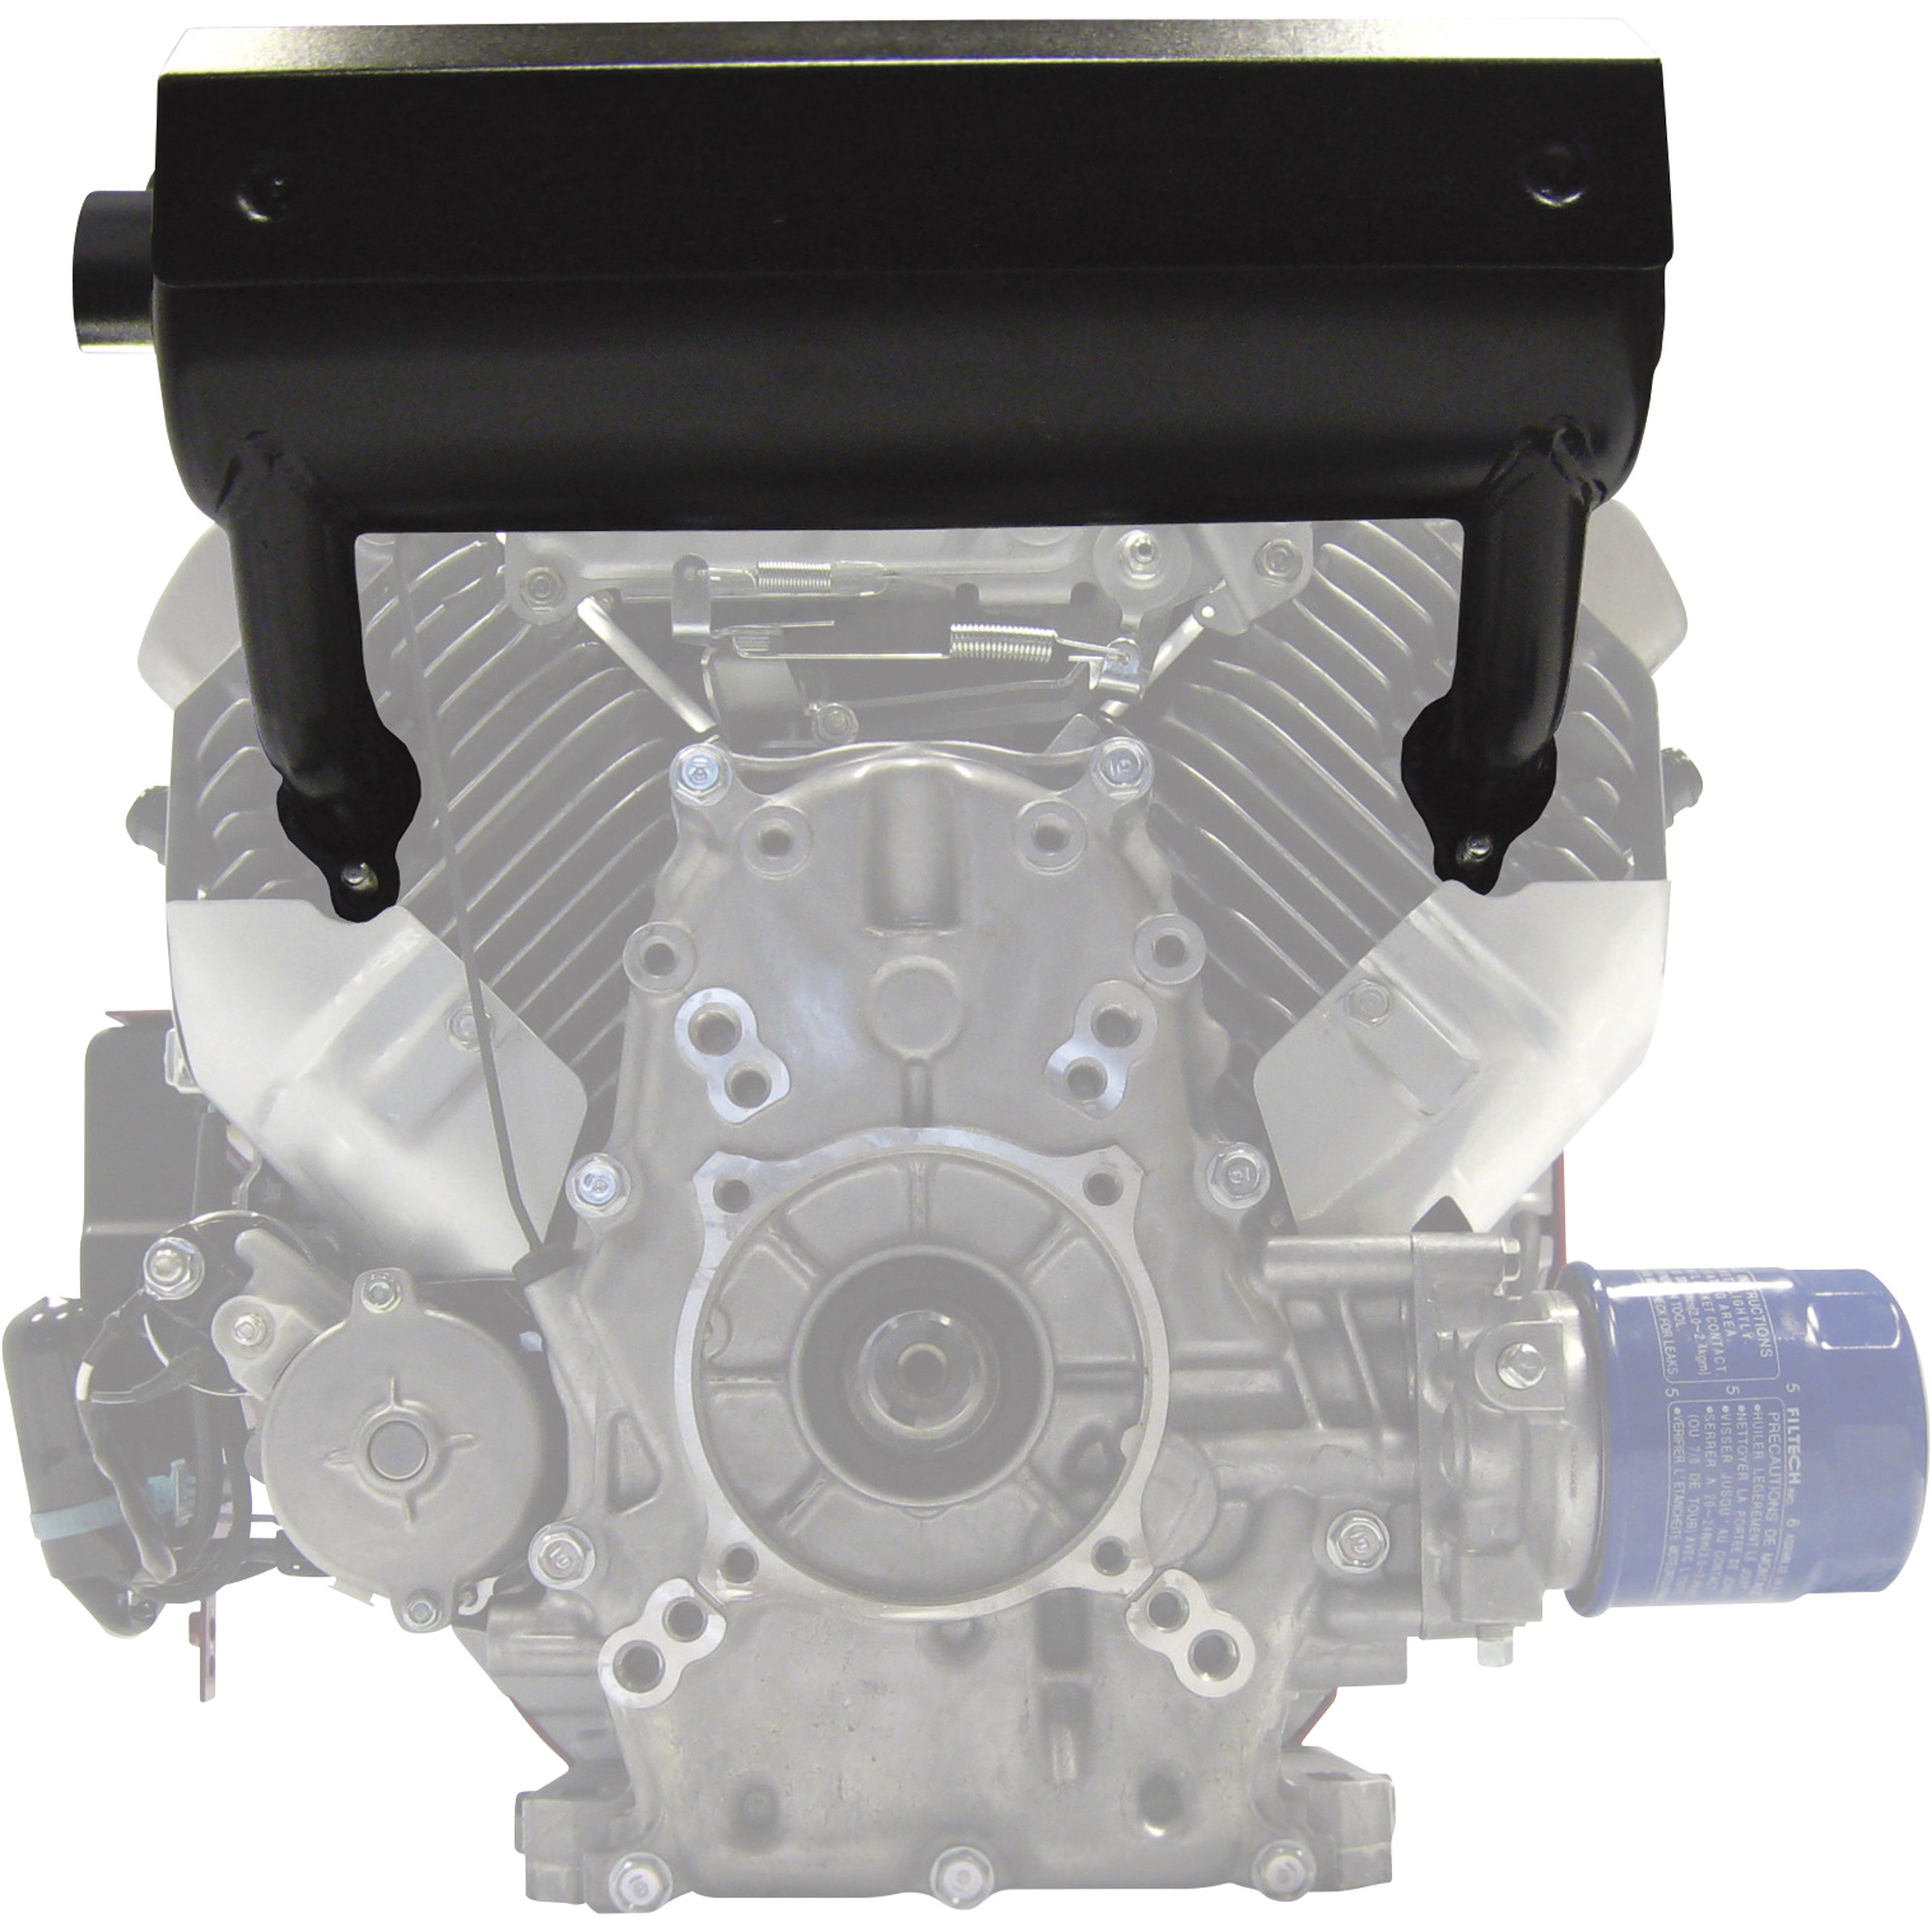 High-Mount Muffler for Honda V-Twin Engines â Fits GX630, 660 and 690 Engines, Left/Starter Side Mount, Model MUF-0560R.SIL